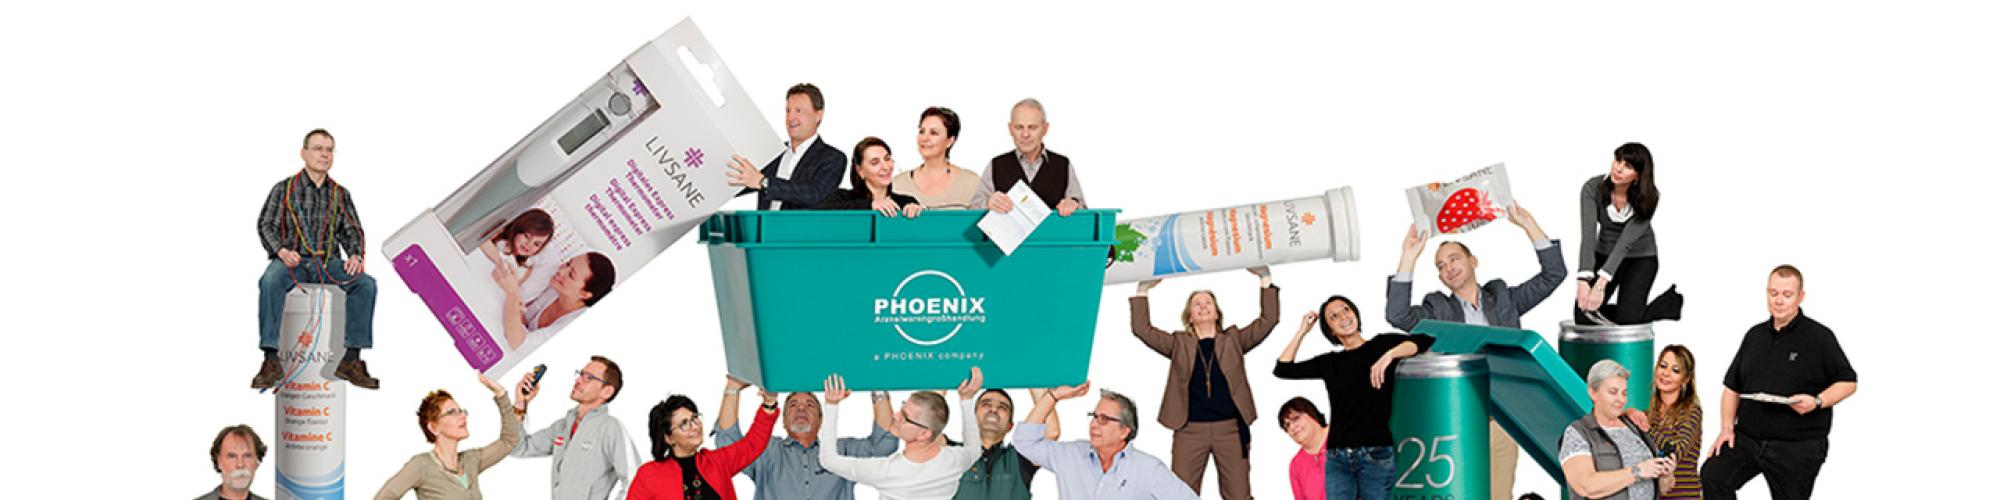 PHOENIX Arzneiwarengroßhandlung GmbH